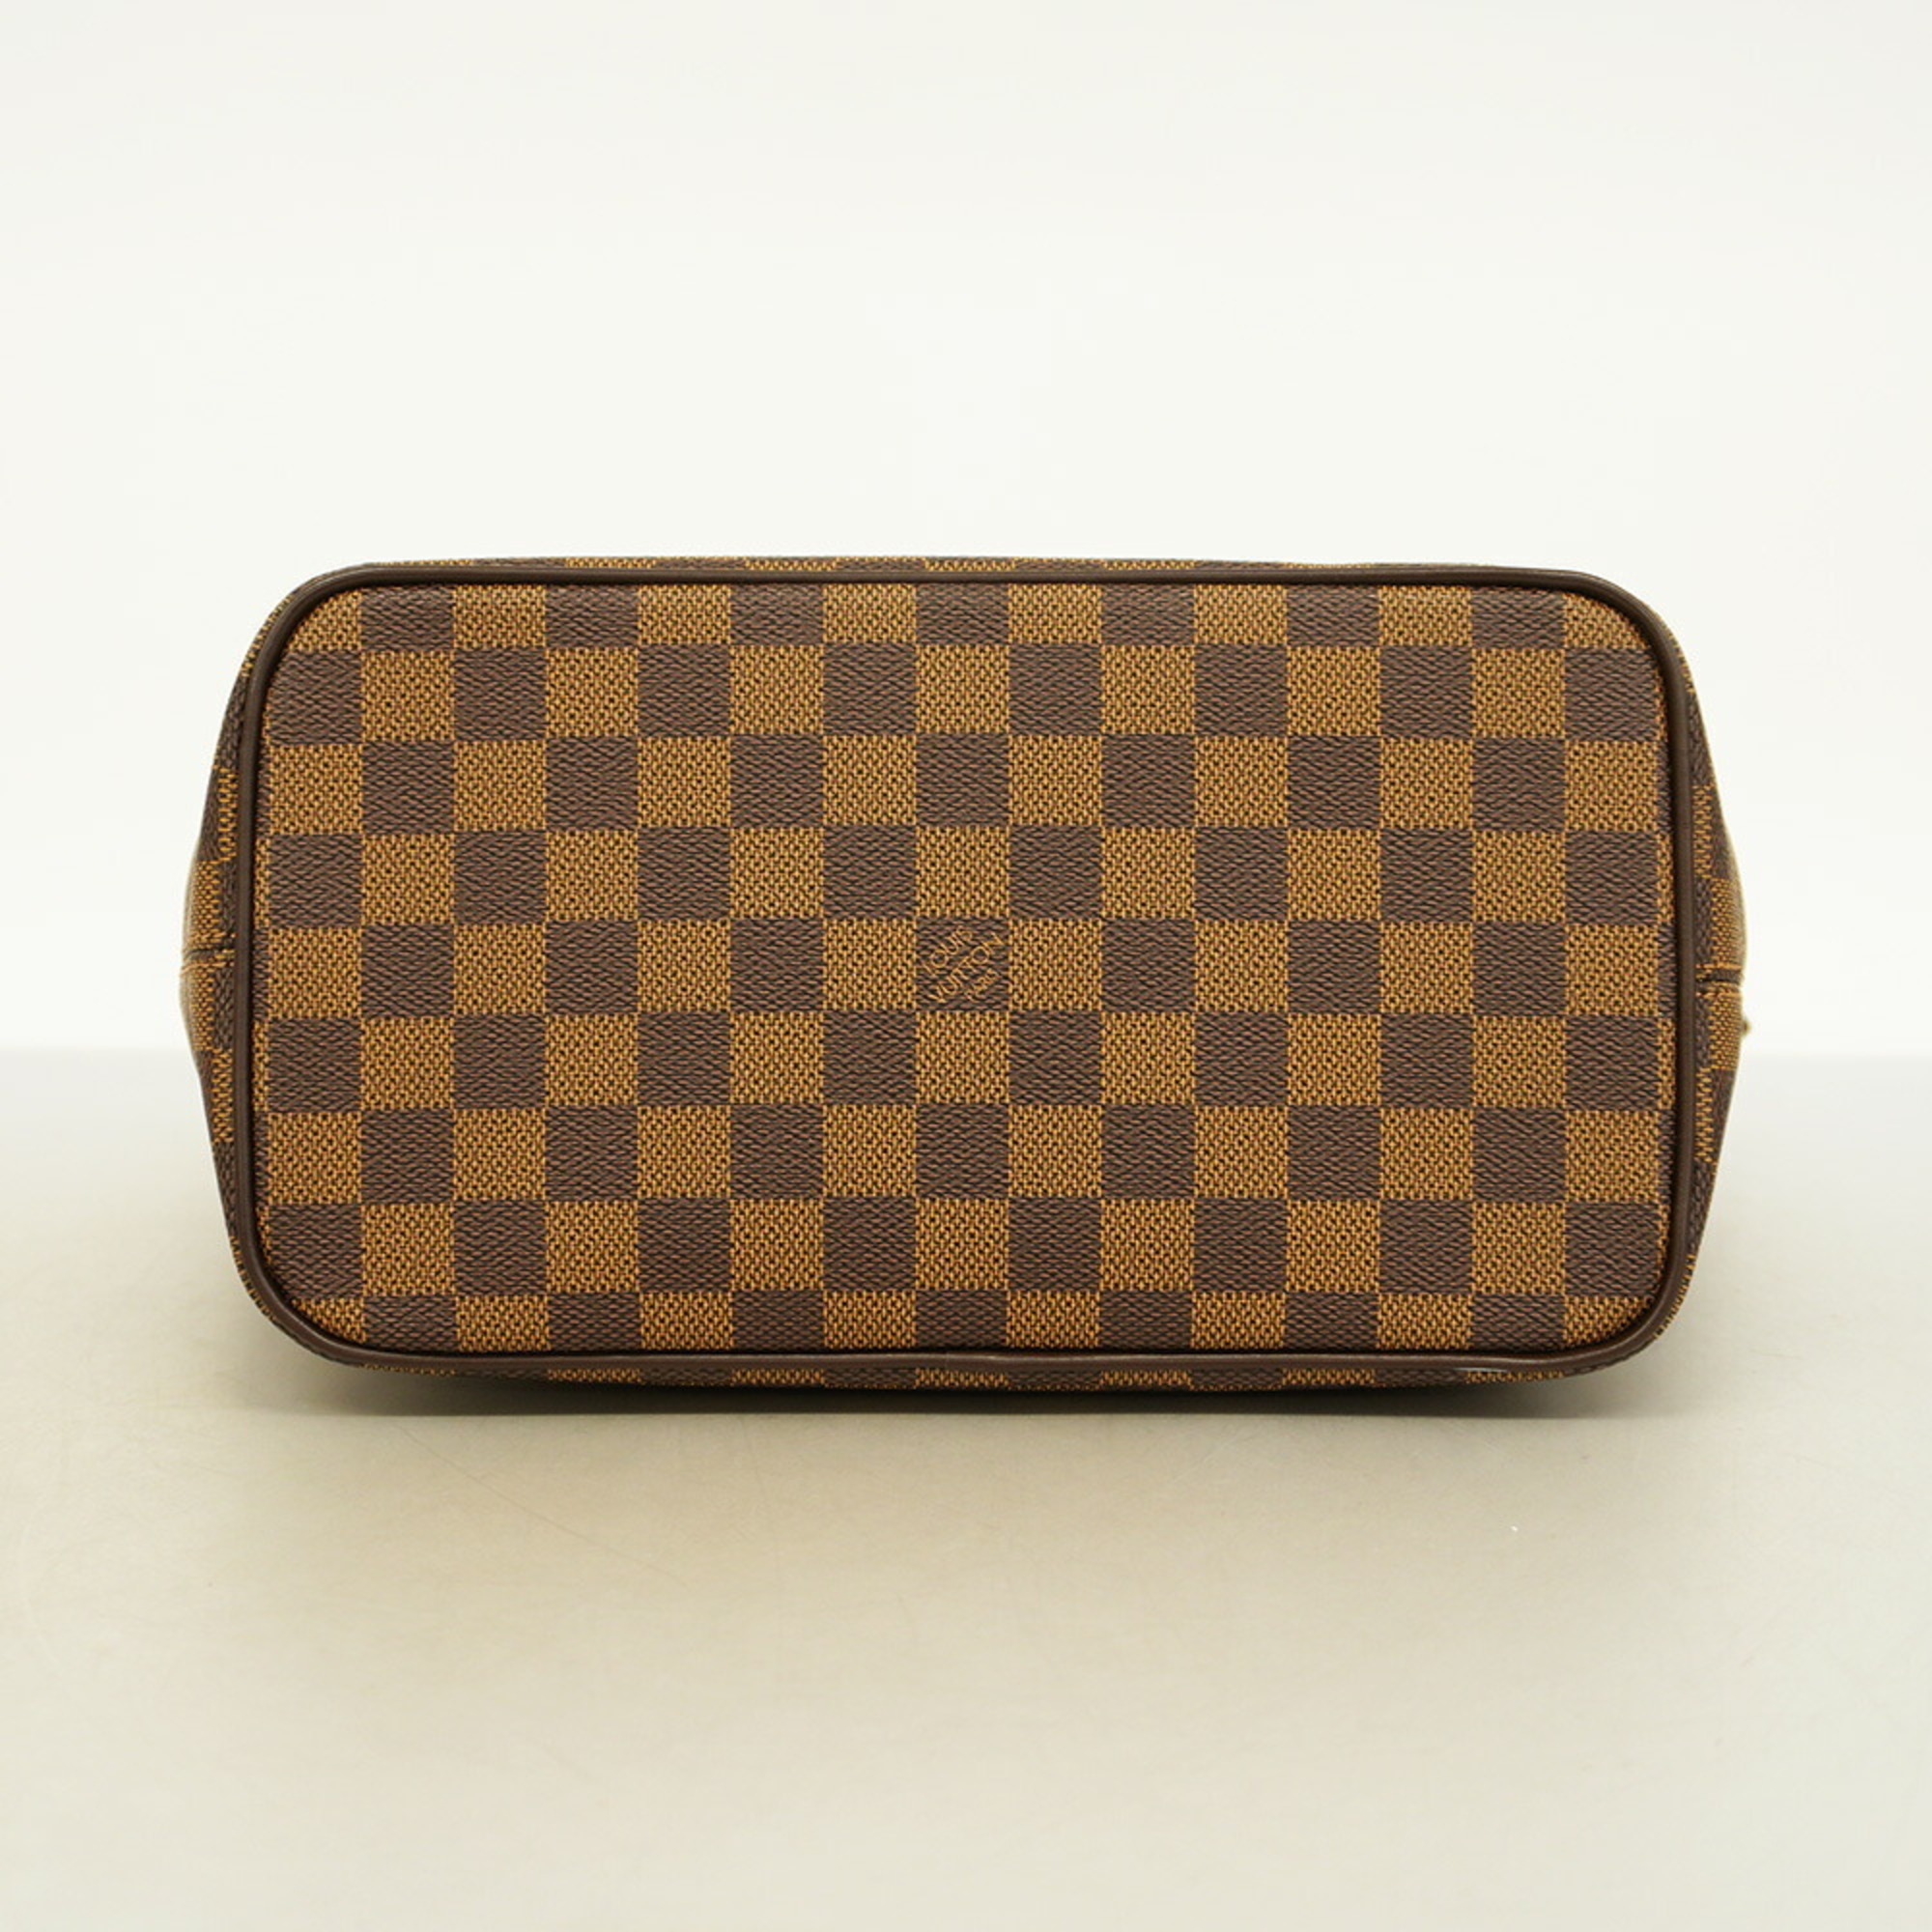 Louis Vuitton Tote Bag Damier Saleya PM N51183 Ebene Women's